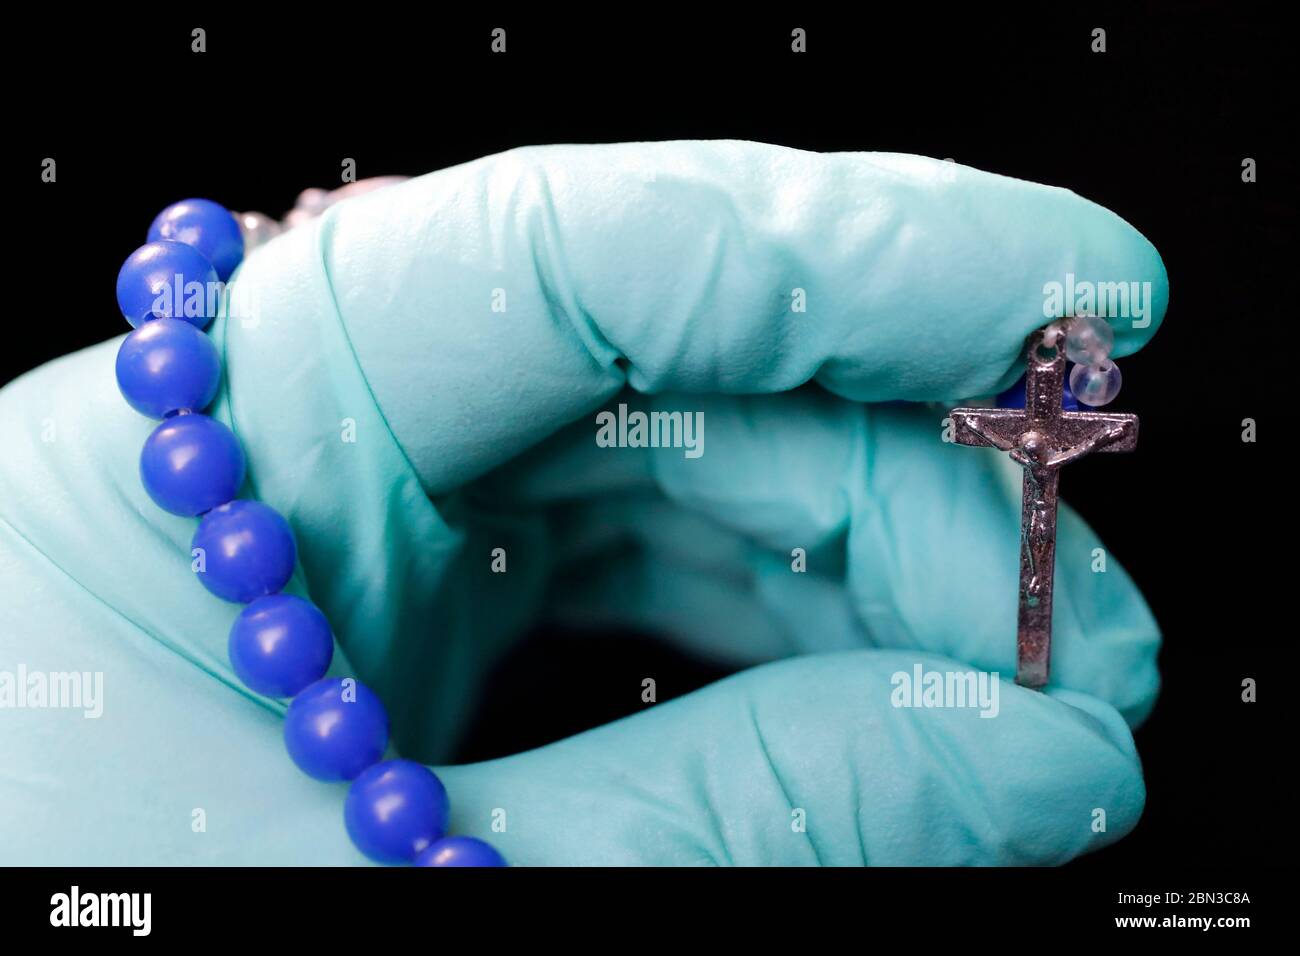 Coronavirus epidemics ( covid-19 ). catholic praying the rosary with a protective glove. Stock Photo